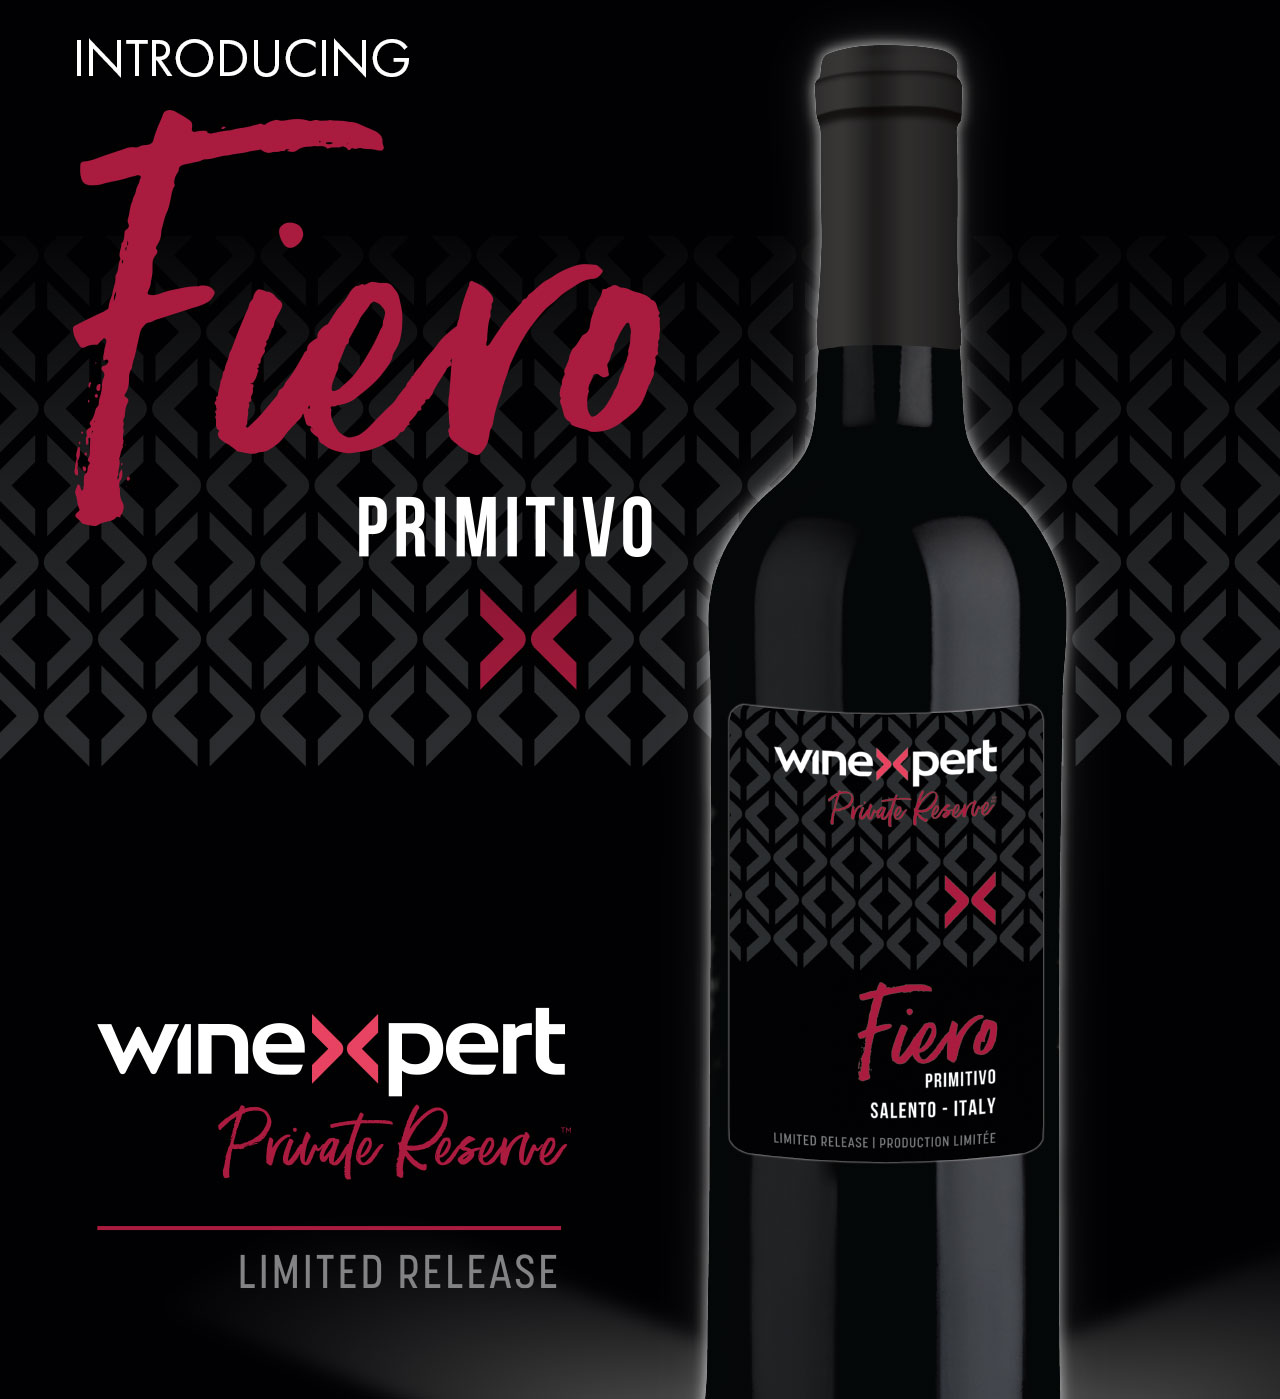 Introducing Winexpert Private ReserveT?  Fiero Primitivo with Grape Skins